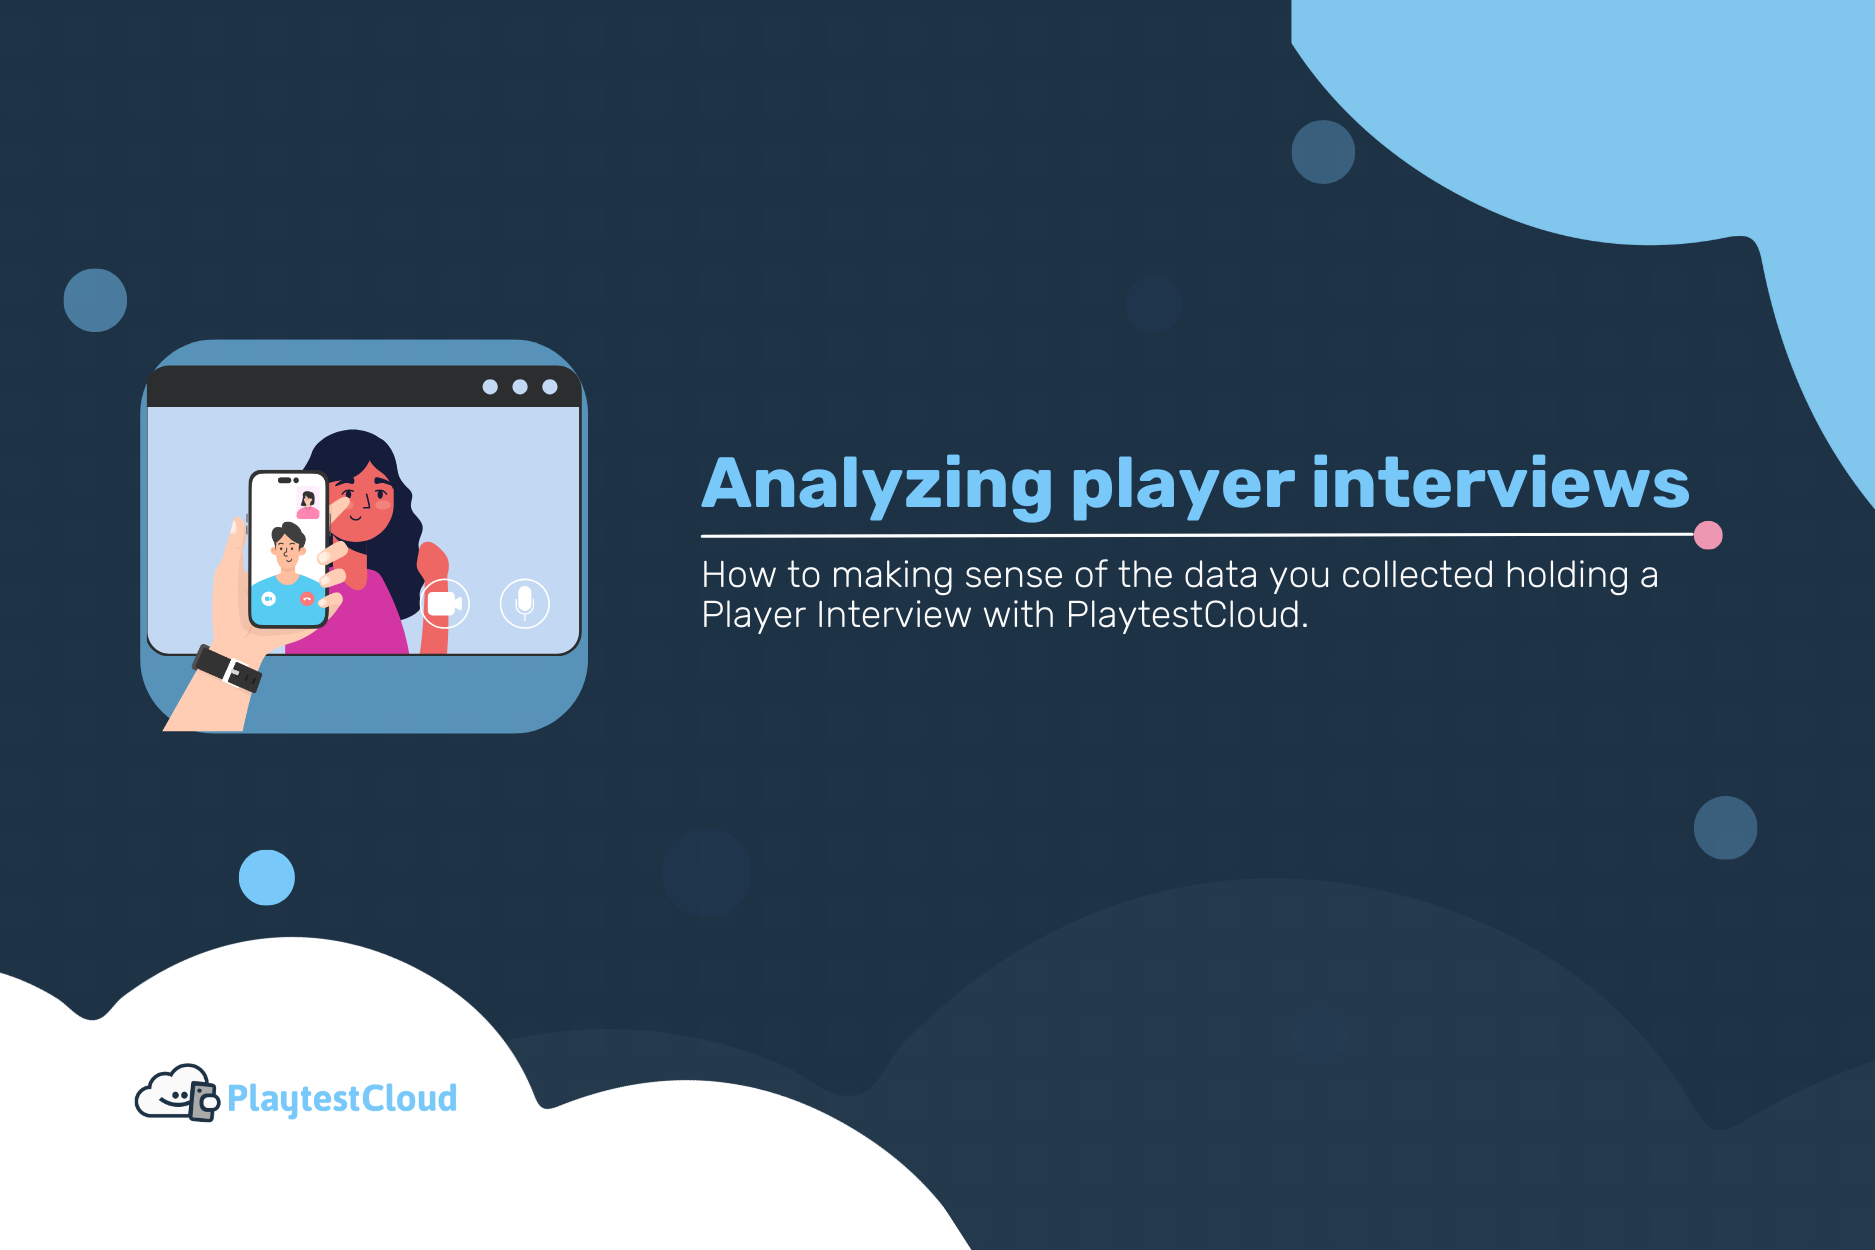 Analyzing player interviews - Making sense of the data